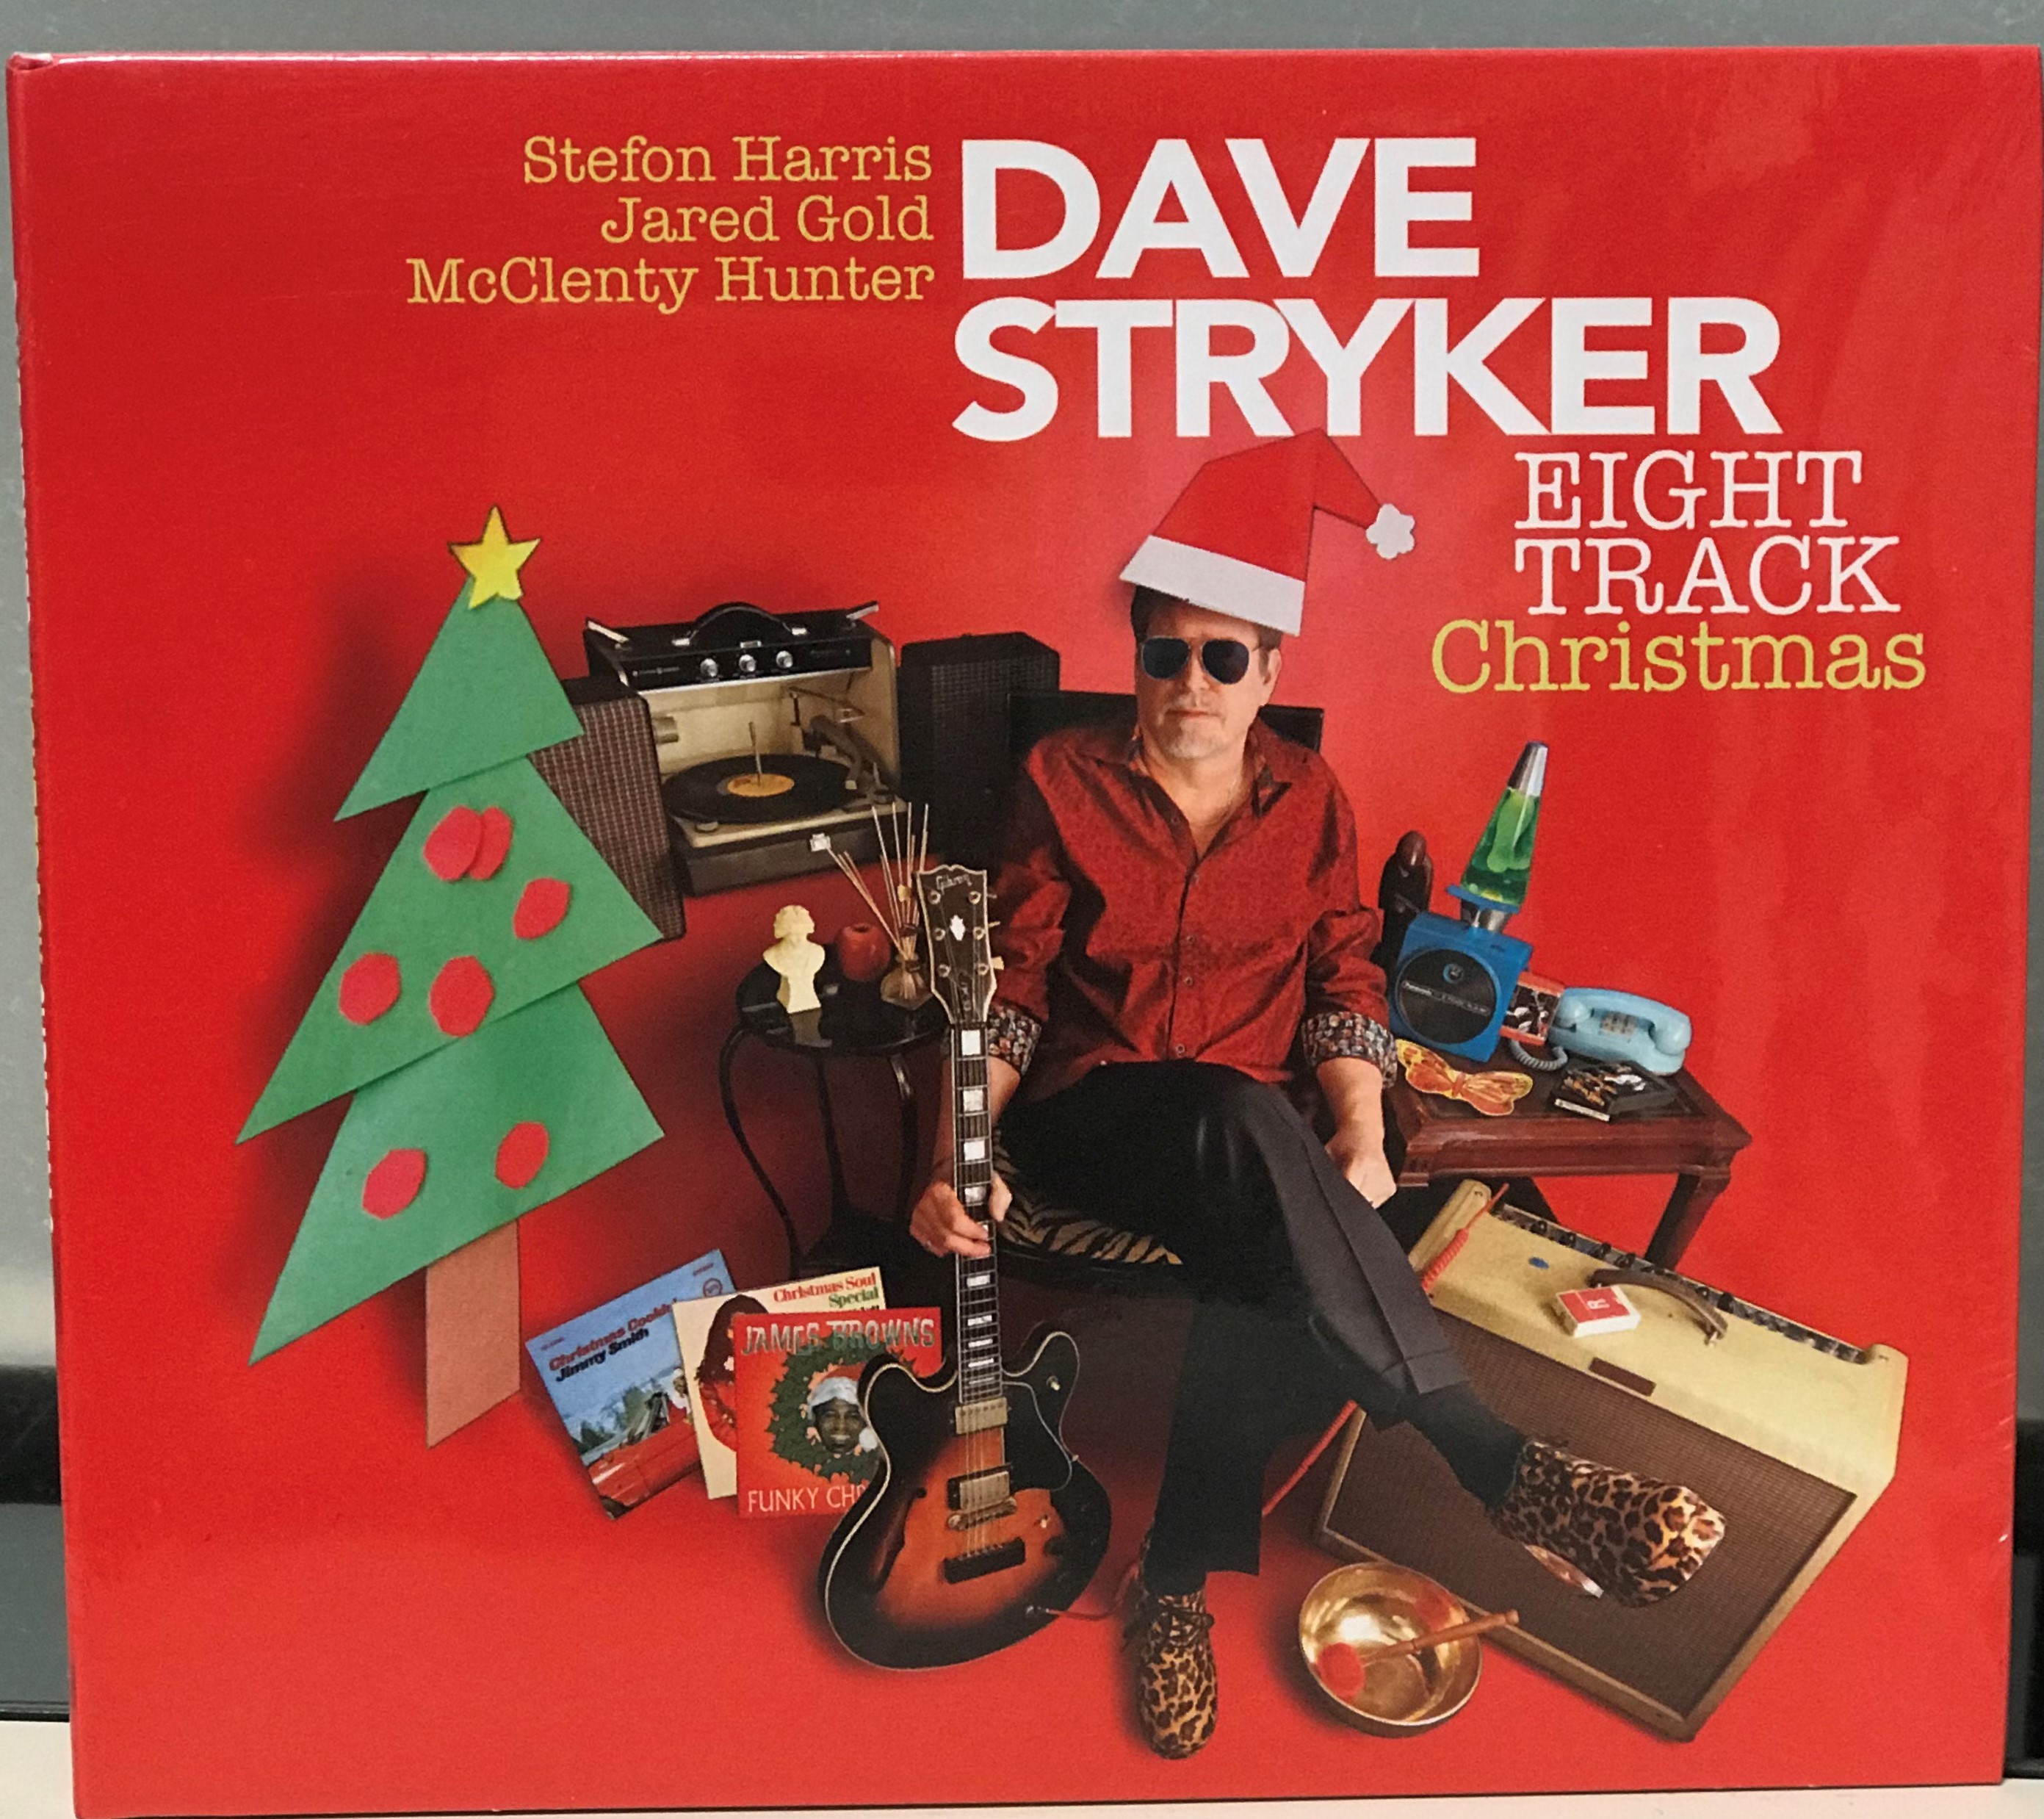 Dave Stryker 8-Track Christmas CD!